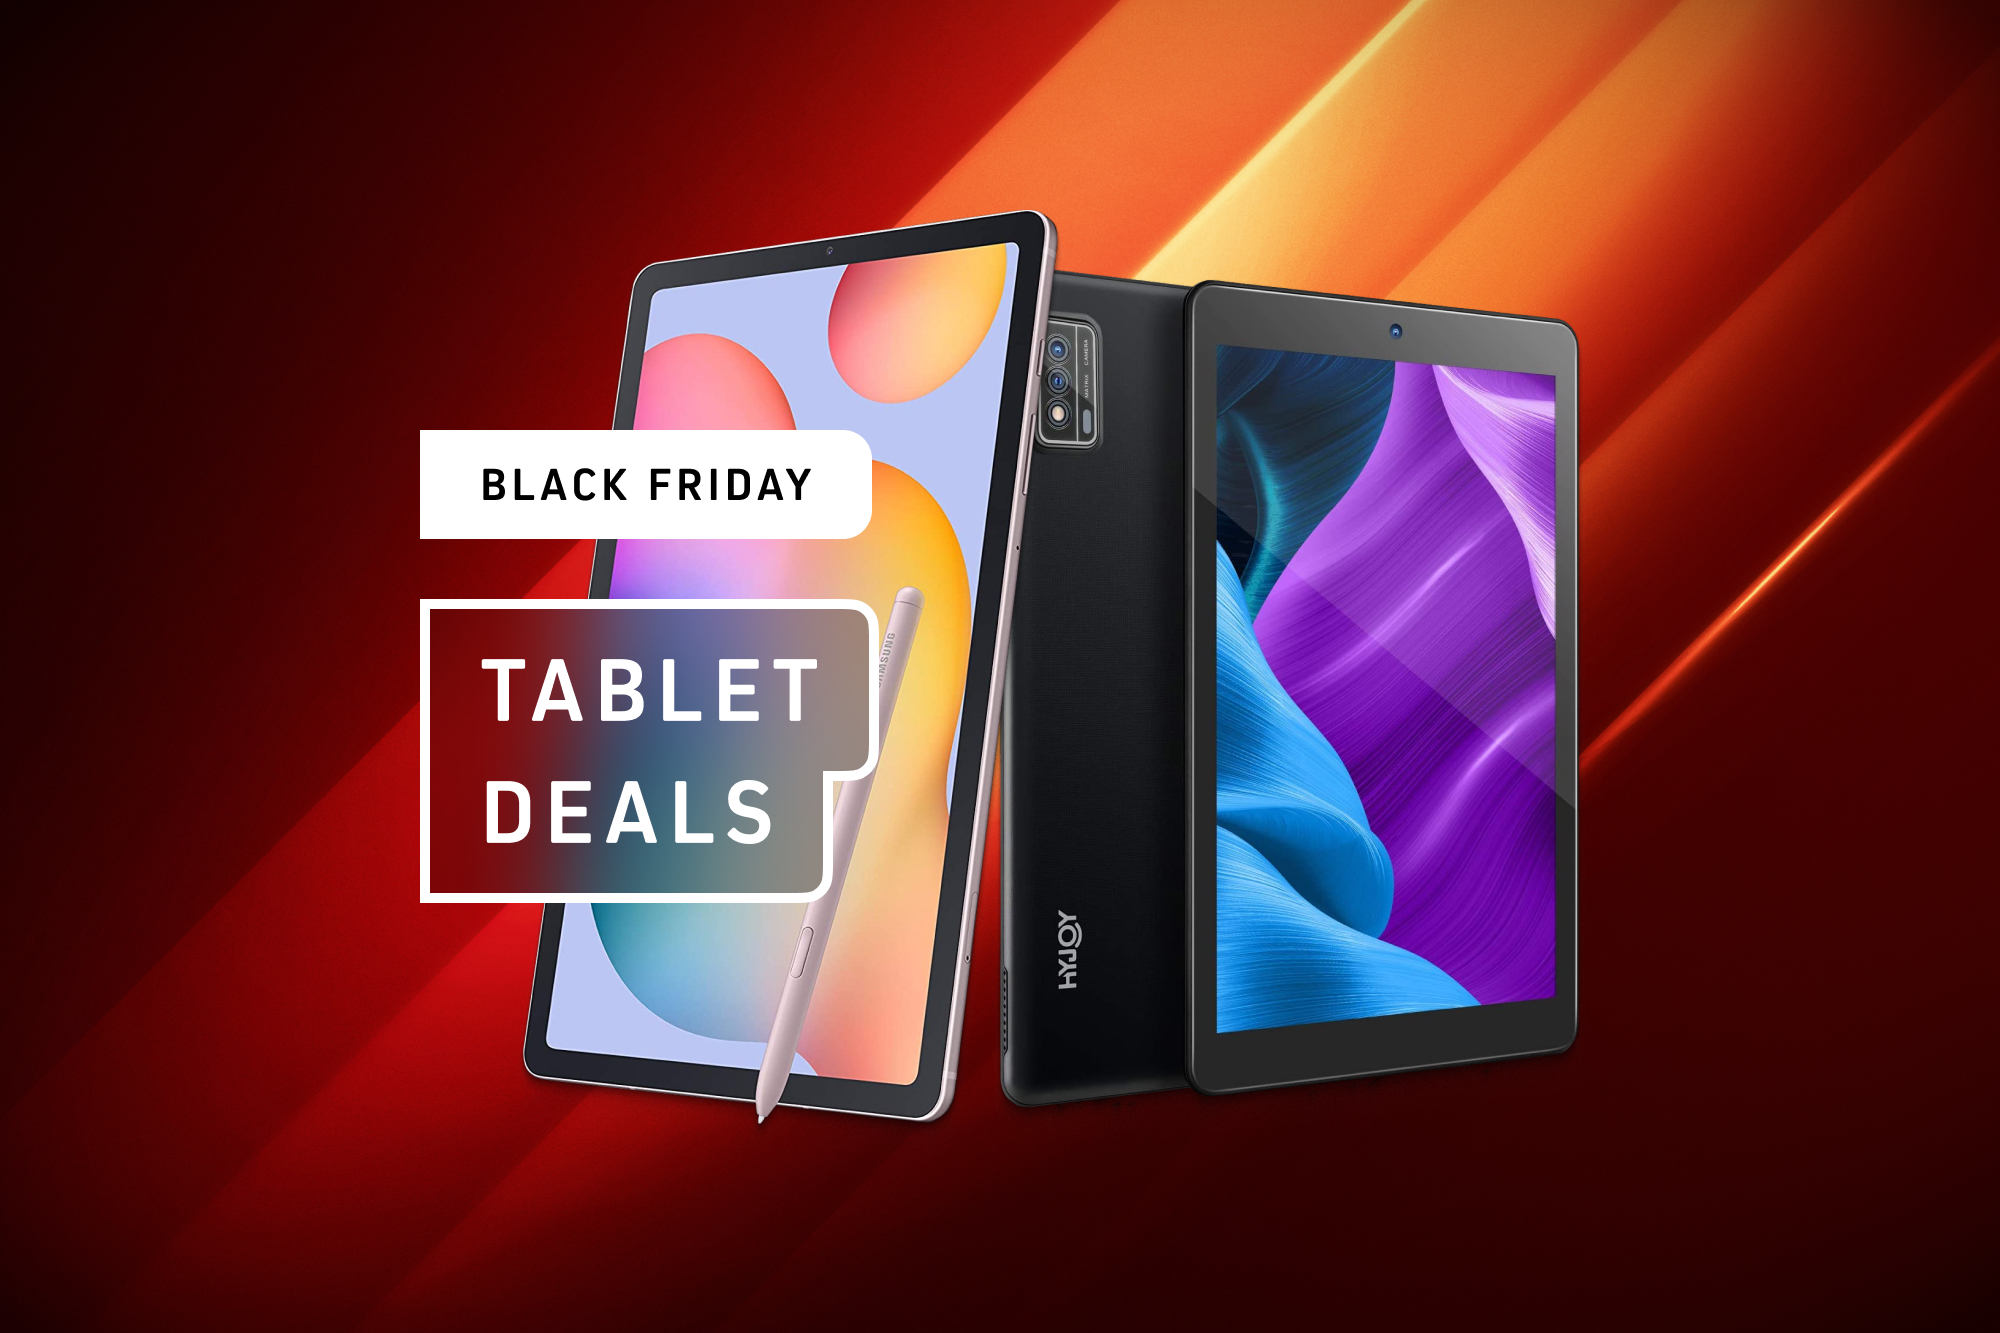 Best Black Friday tablet deals: Apple iPad, Samsung Galaxy
Tab